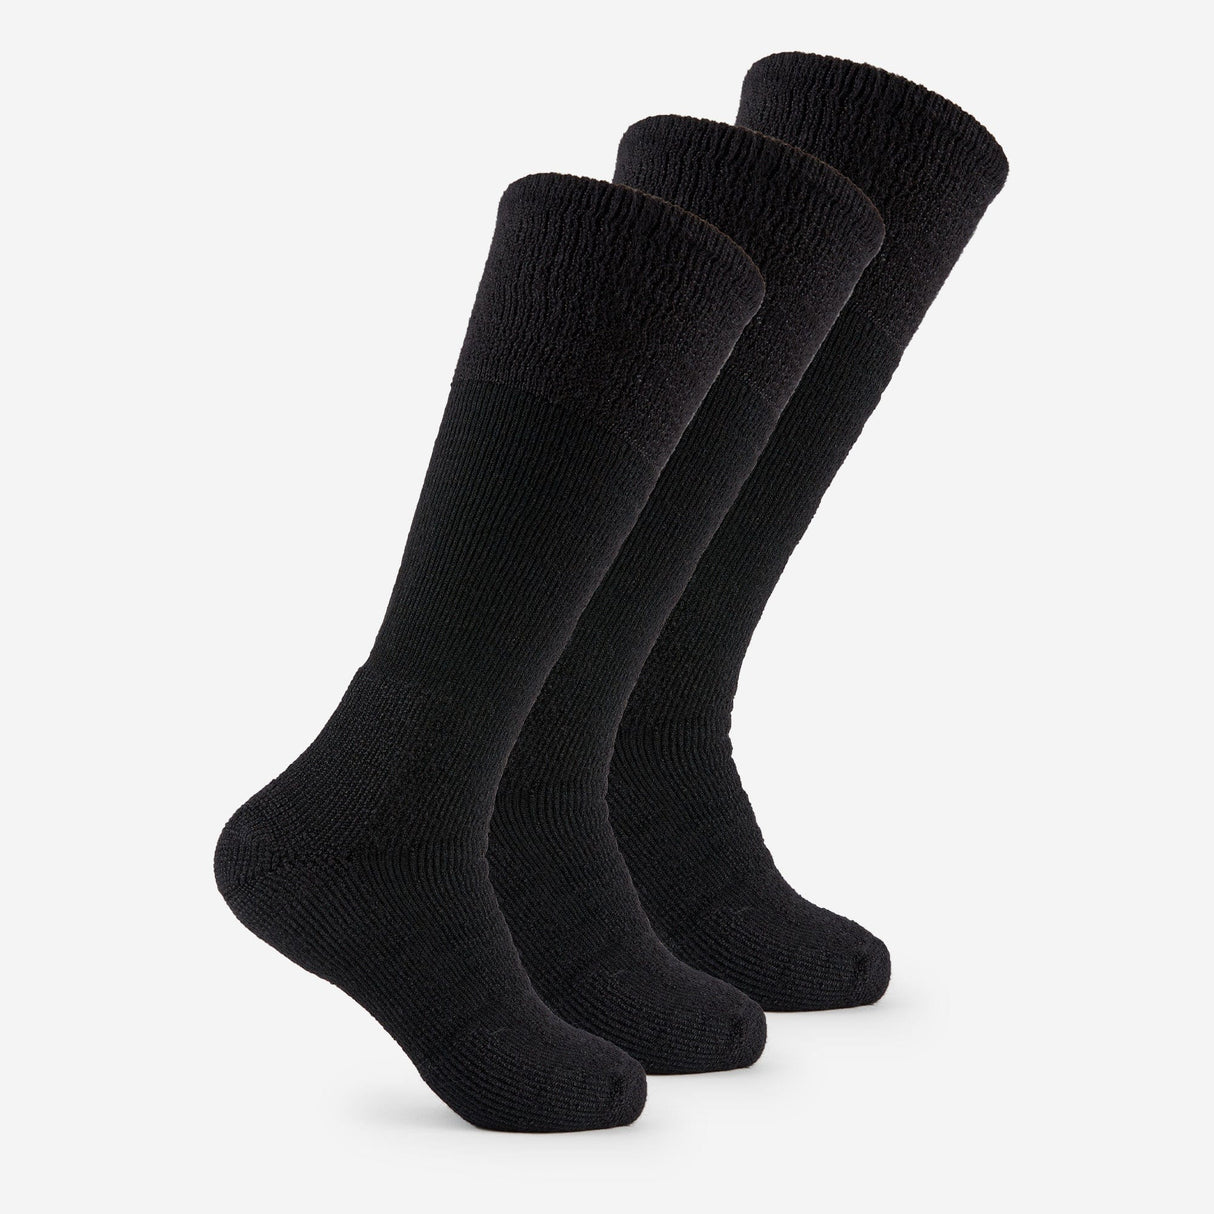 Thorlo Military Maximum Cushion OTC Socks  -  Medium / Black / 3-Pair Pack